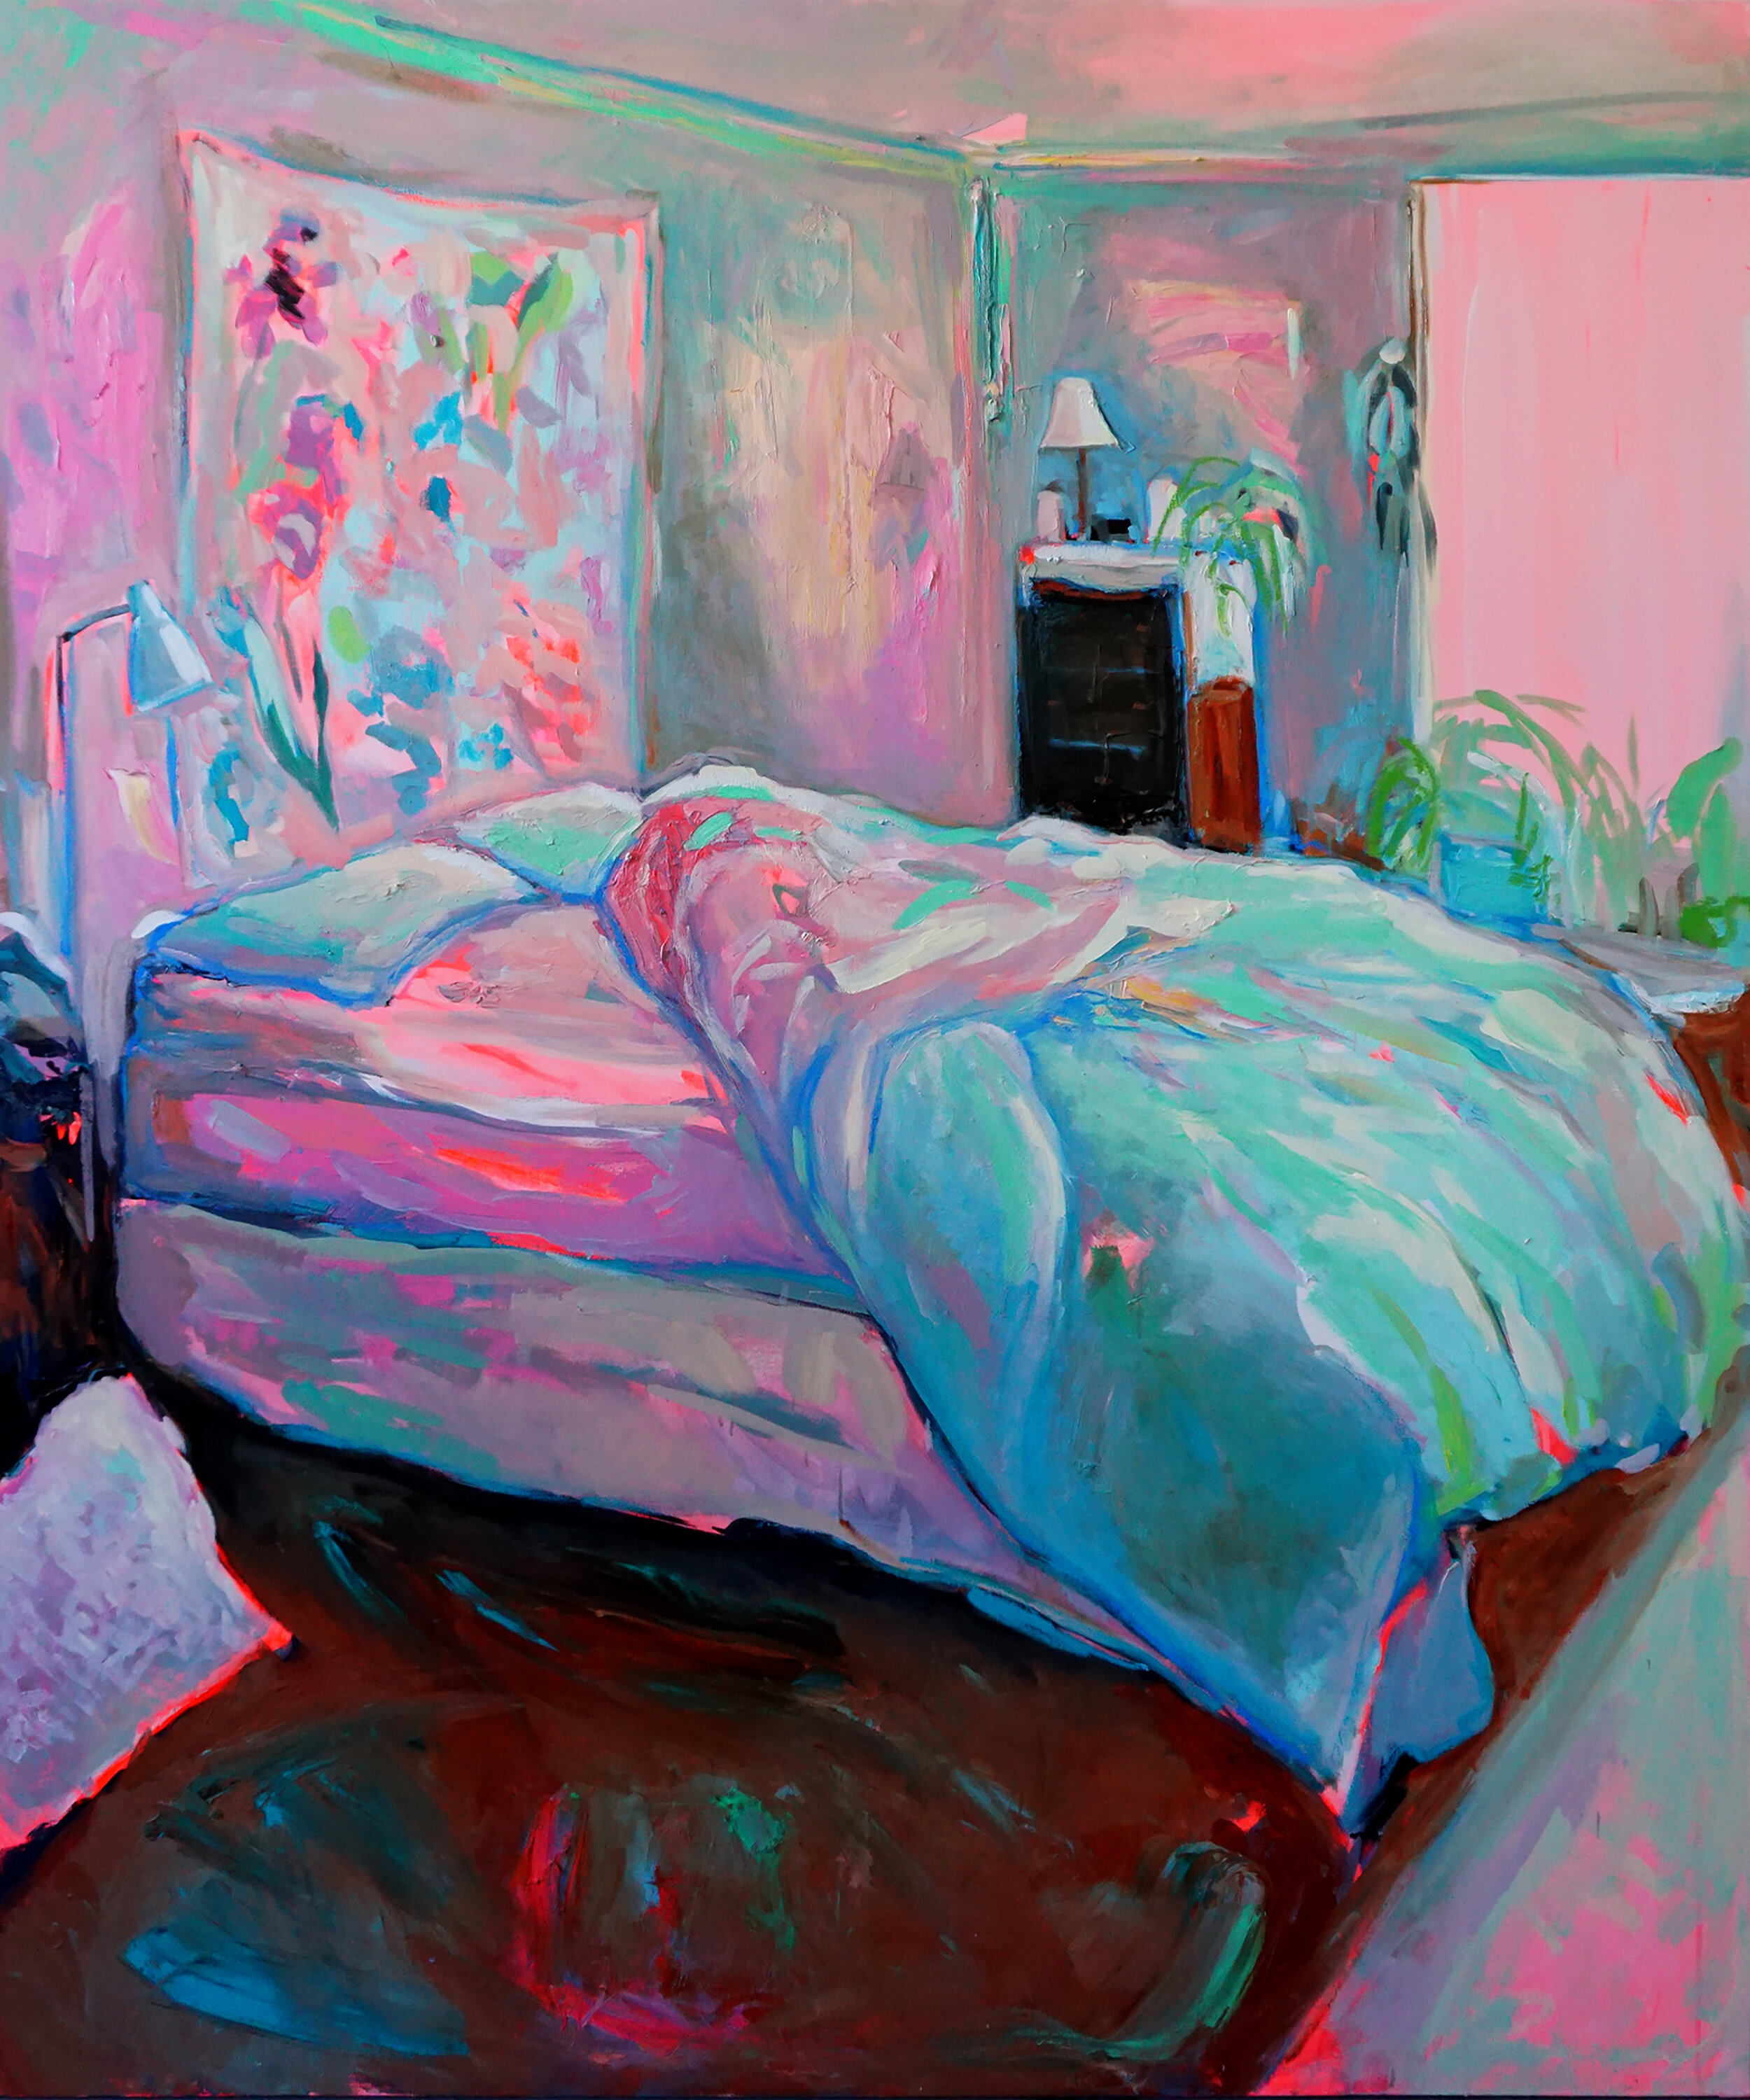  Ekaterina Popova  - Resting Place -  2019, Oil on canvas - 72 x 60 x 2 inches / 183 x 152 x 5 cm 